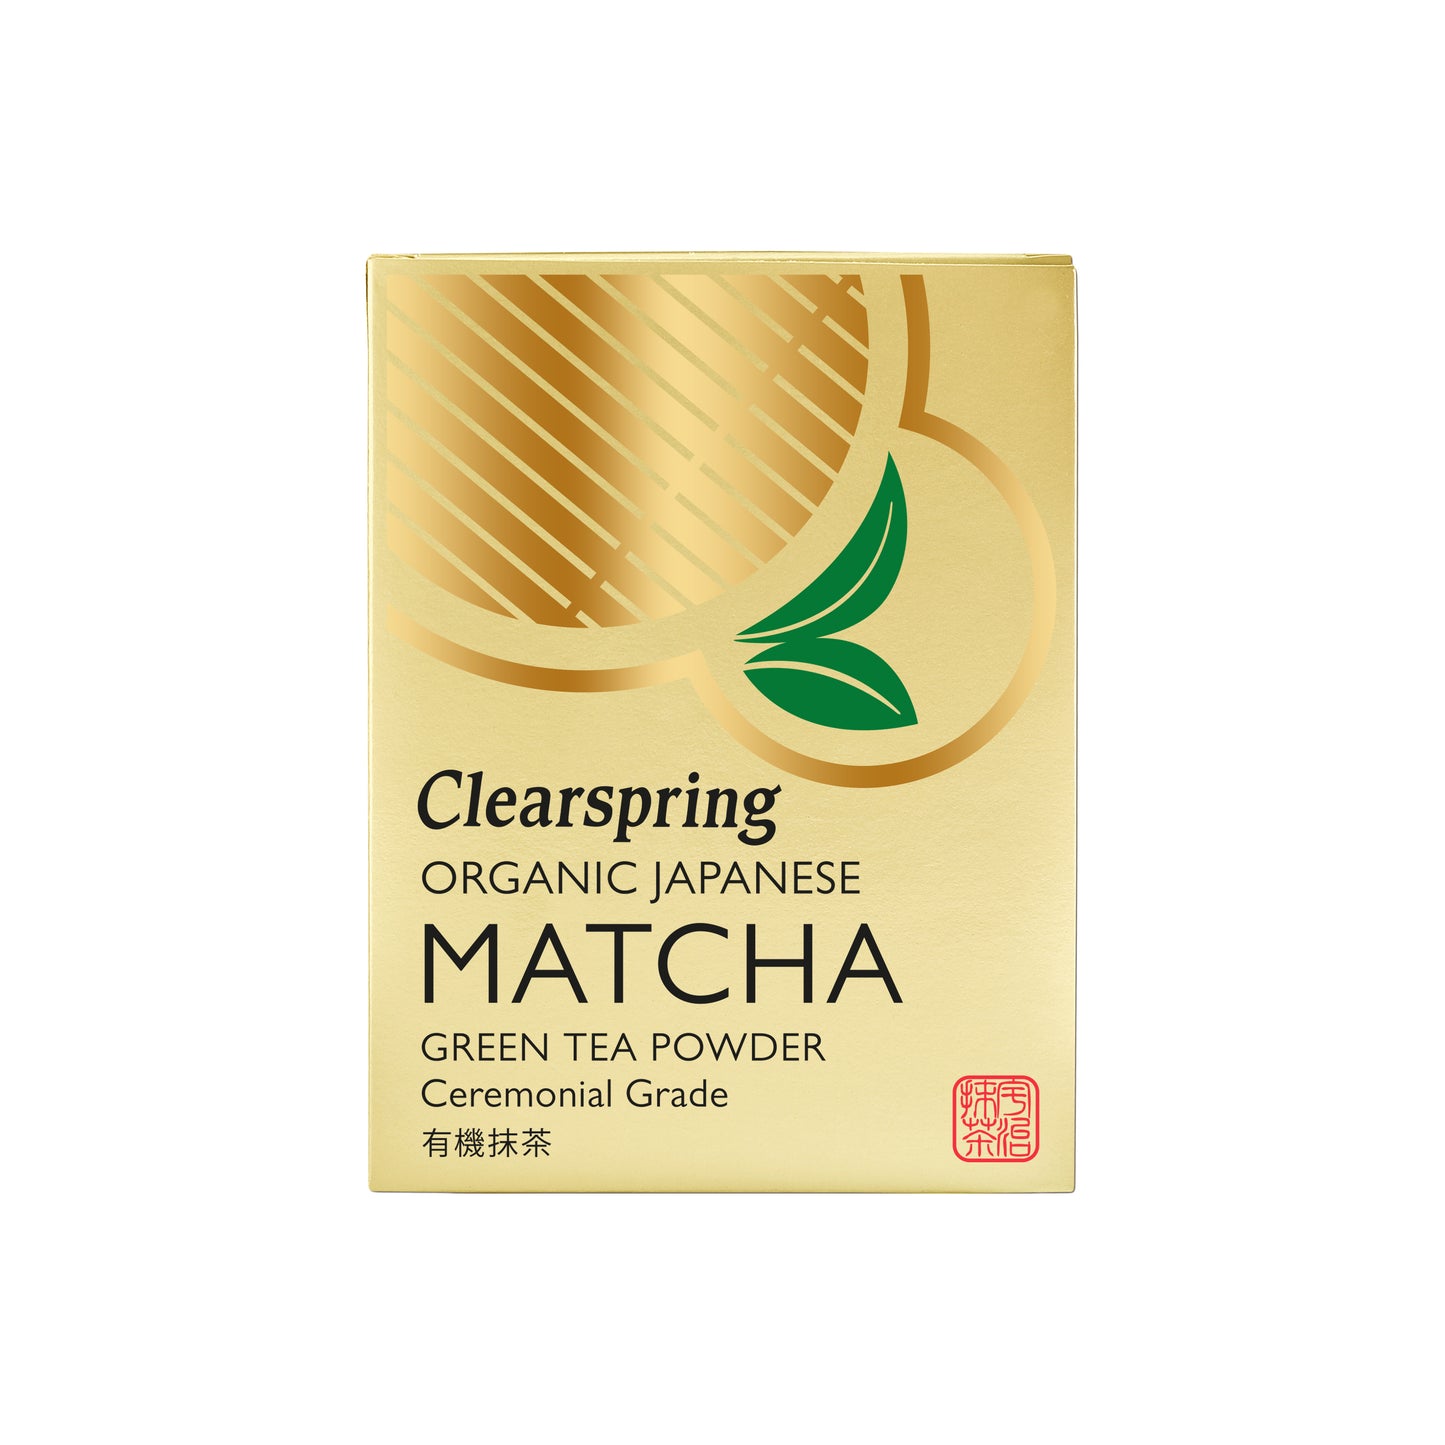 Organic Japanese Matcha Green Tea Powder - Ceremonial Grade